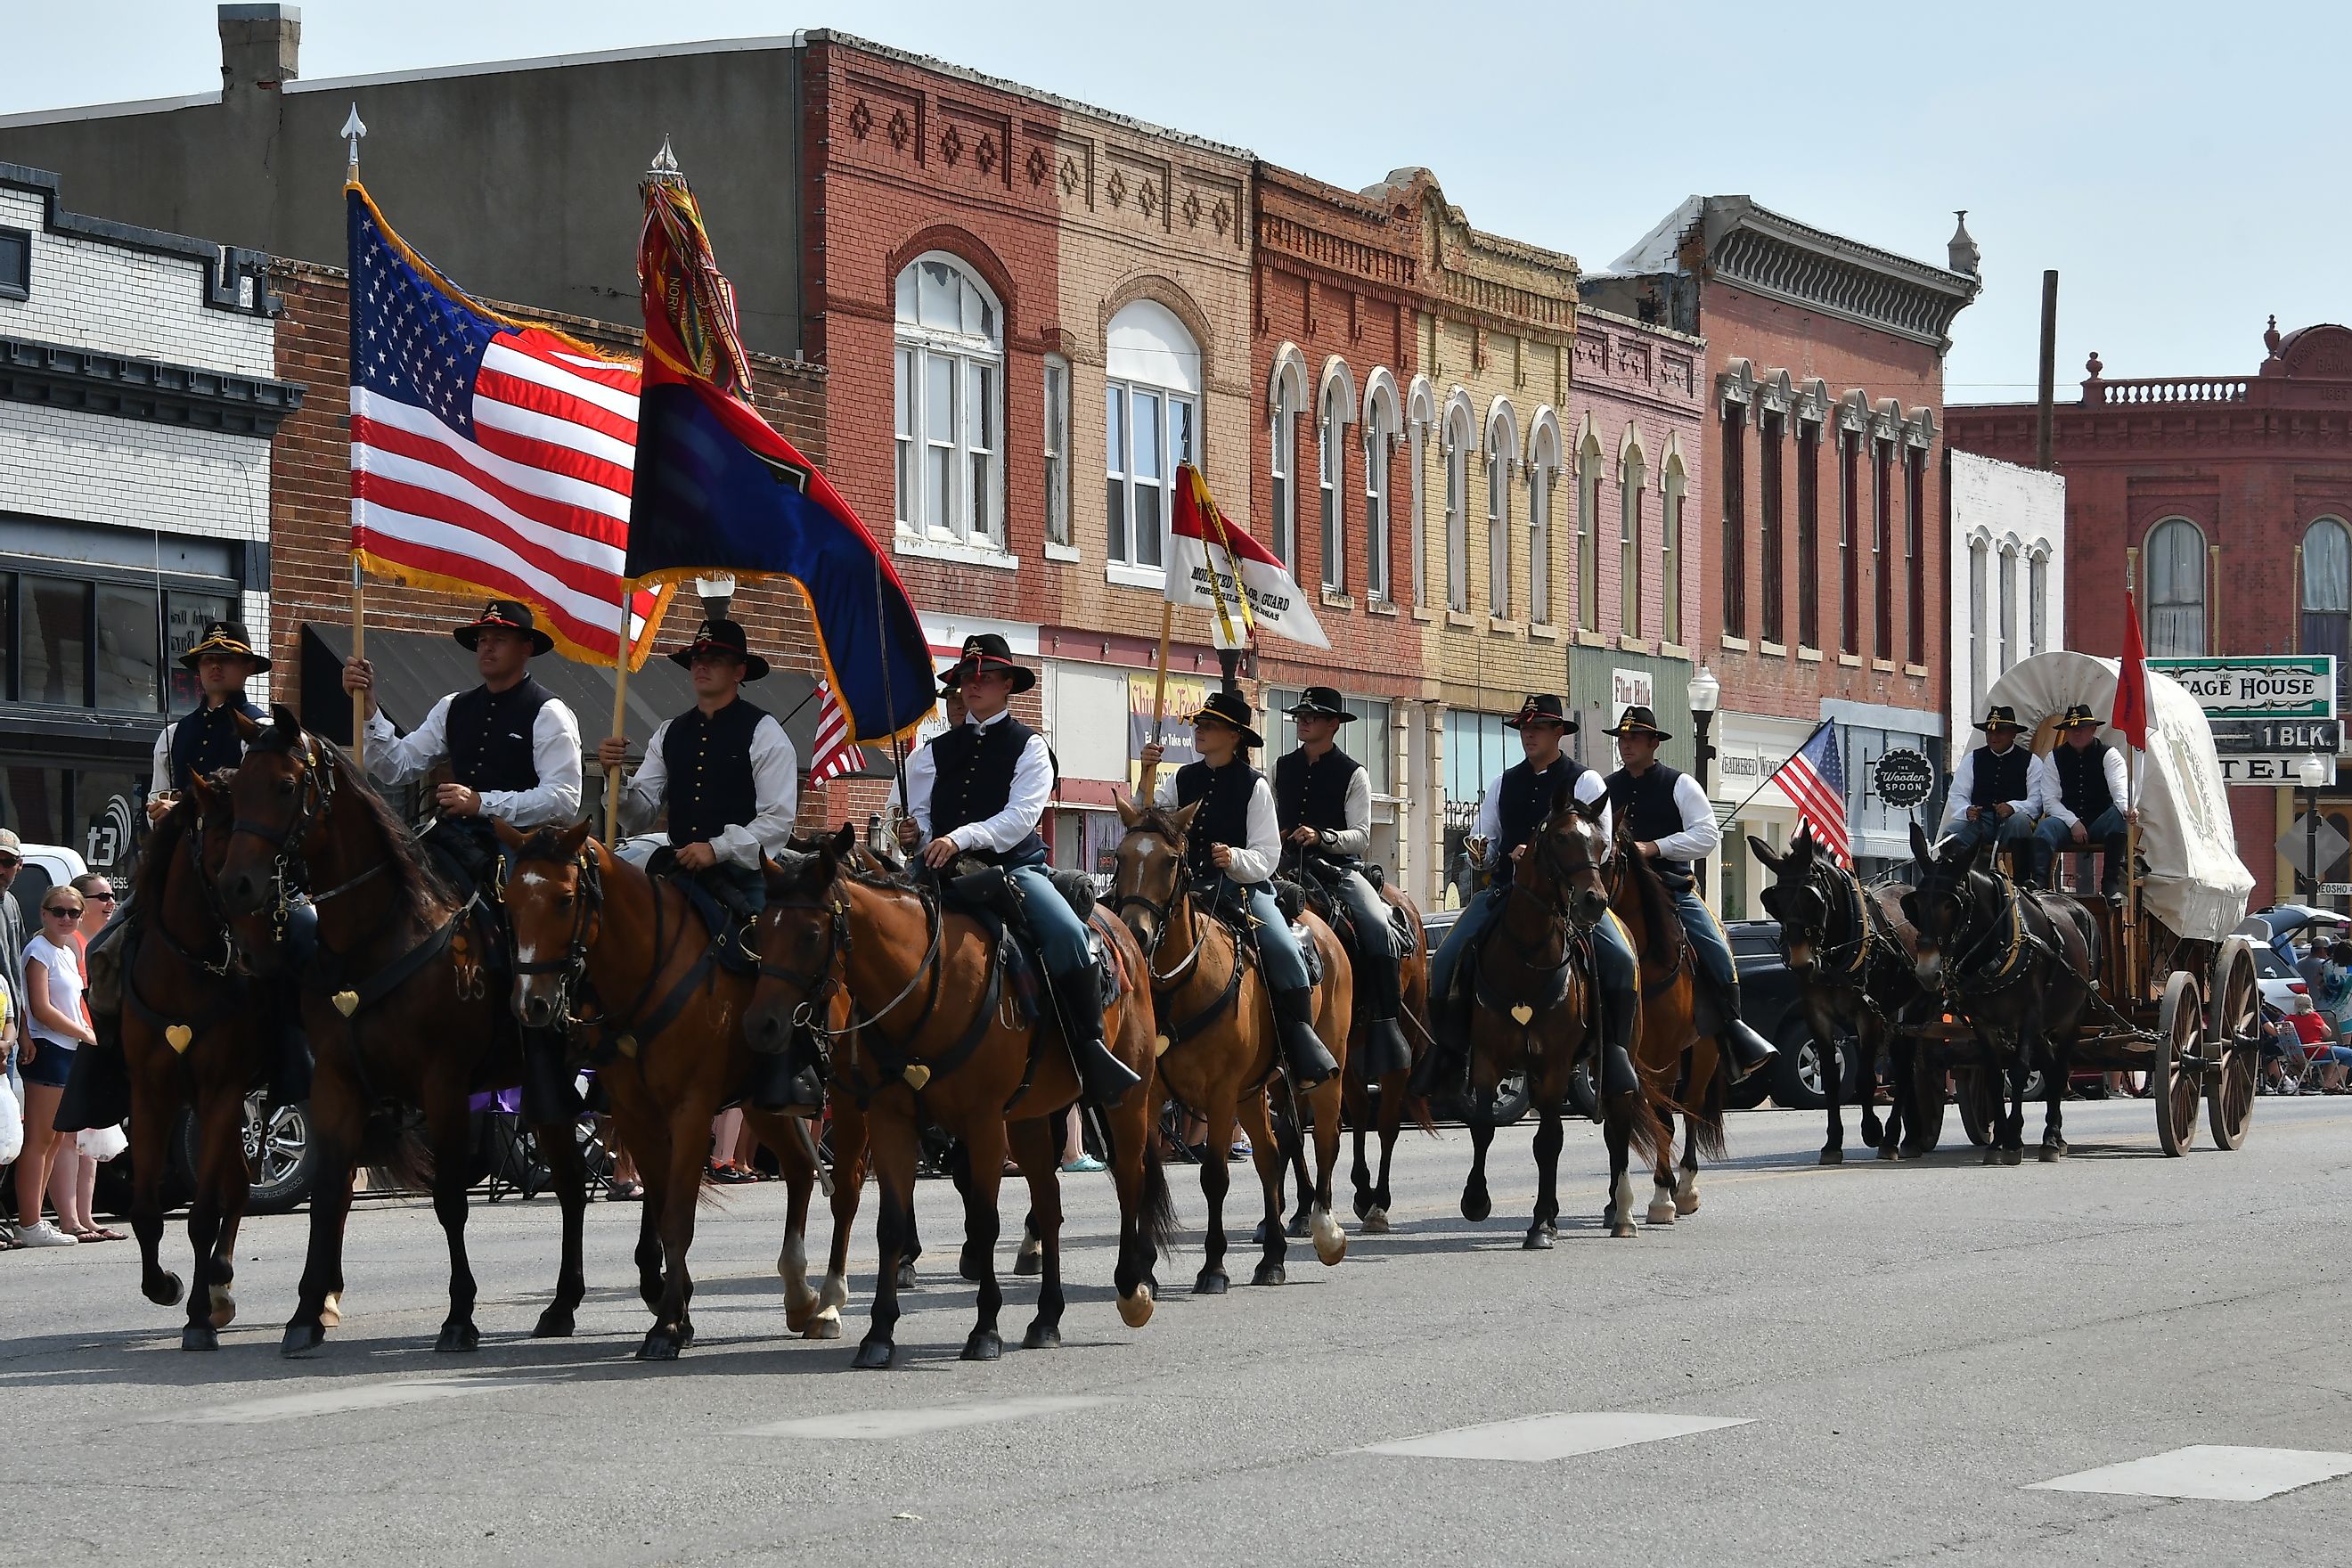 Civil War ride in the Washunga Days Parade Council Grove. Mark Reinstein / Shutterstock.com